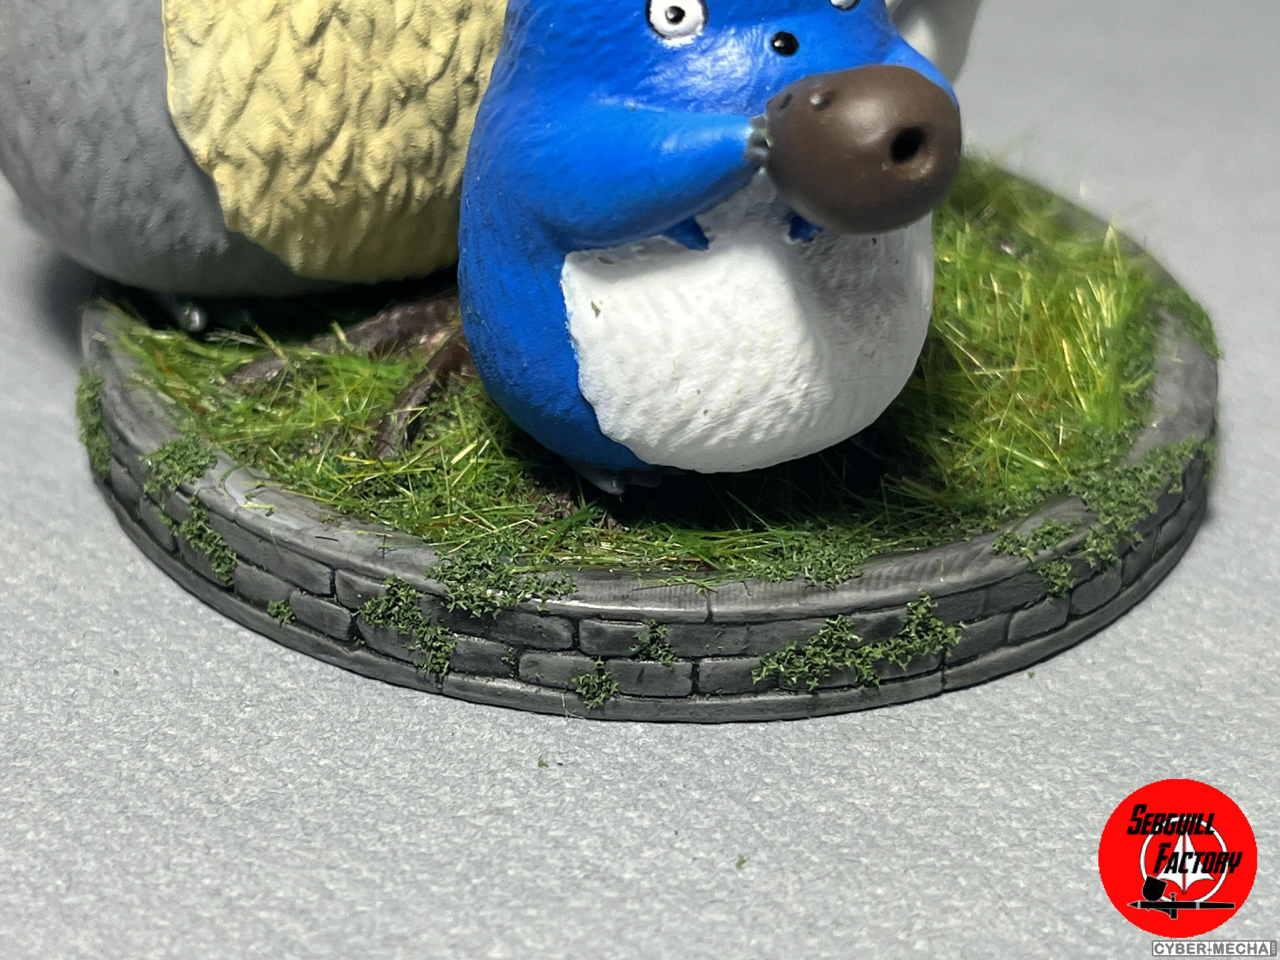 Print 3D : Totoro 1701076927